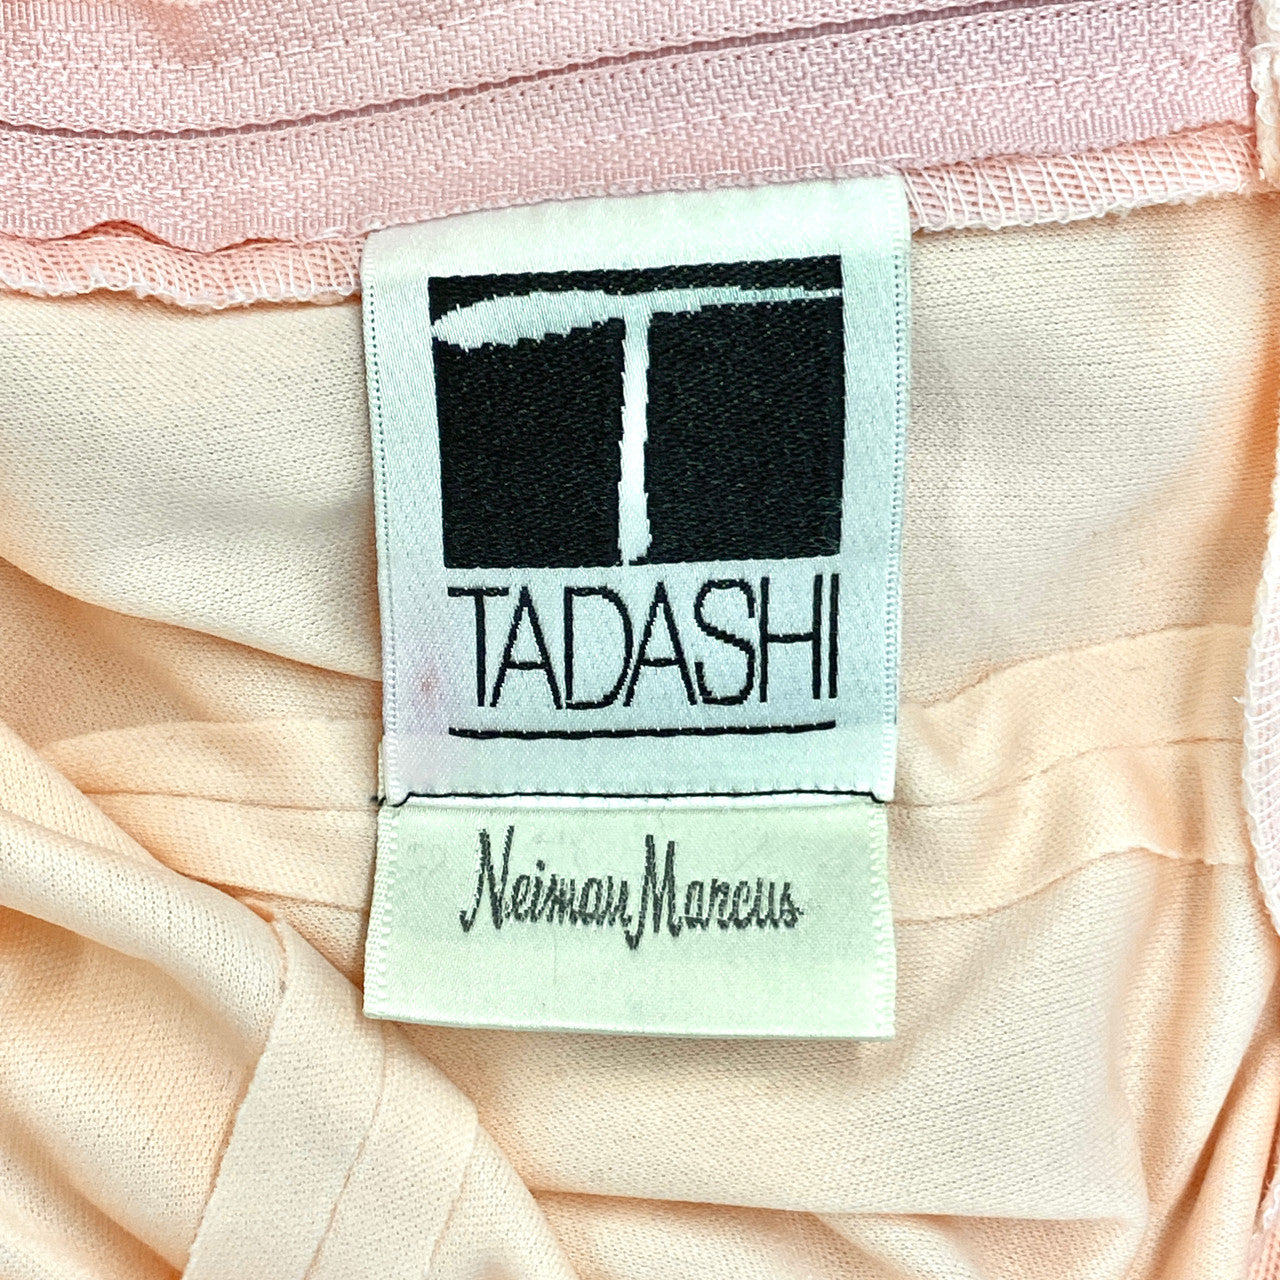 Tadashi Long Mesh Net Skirt- Label